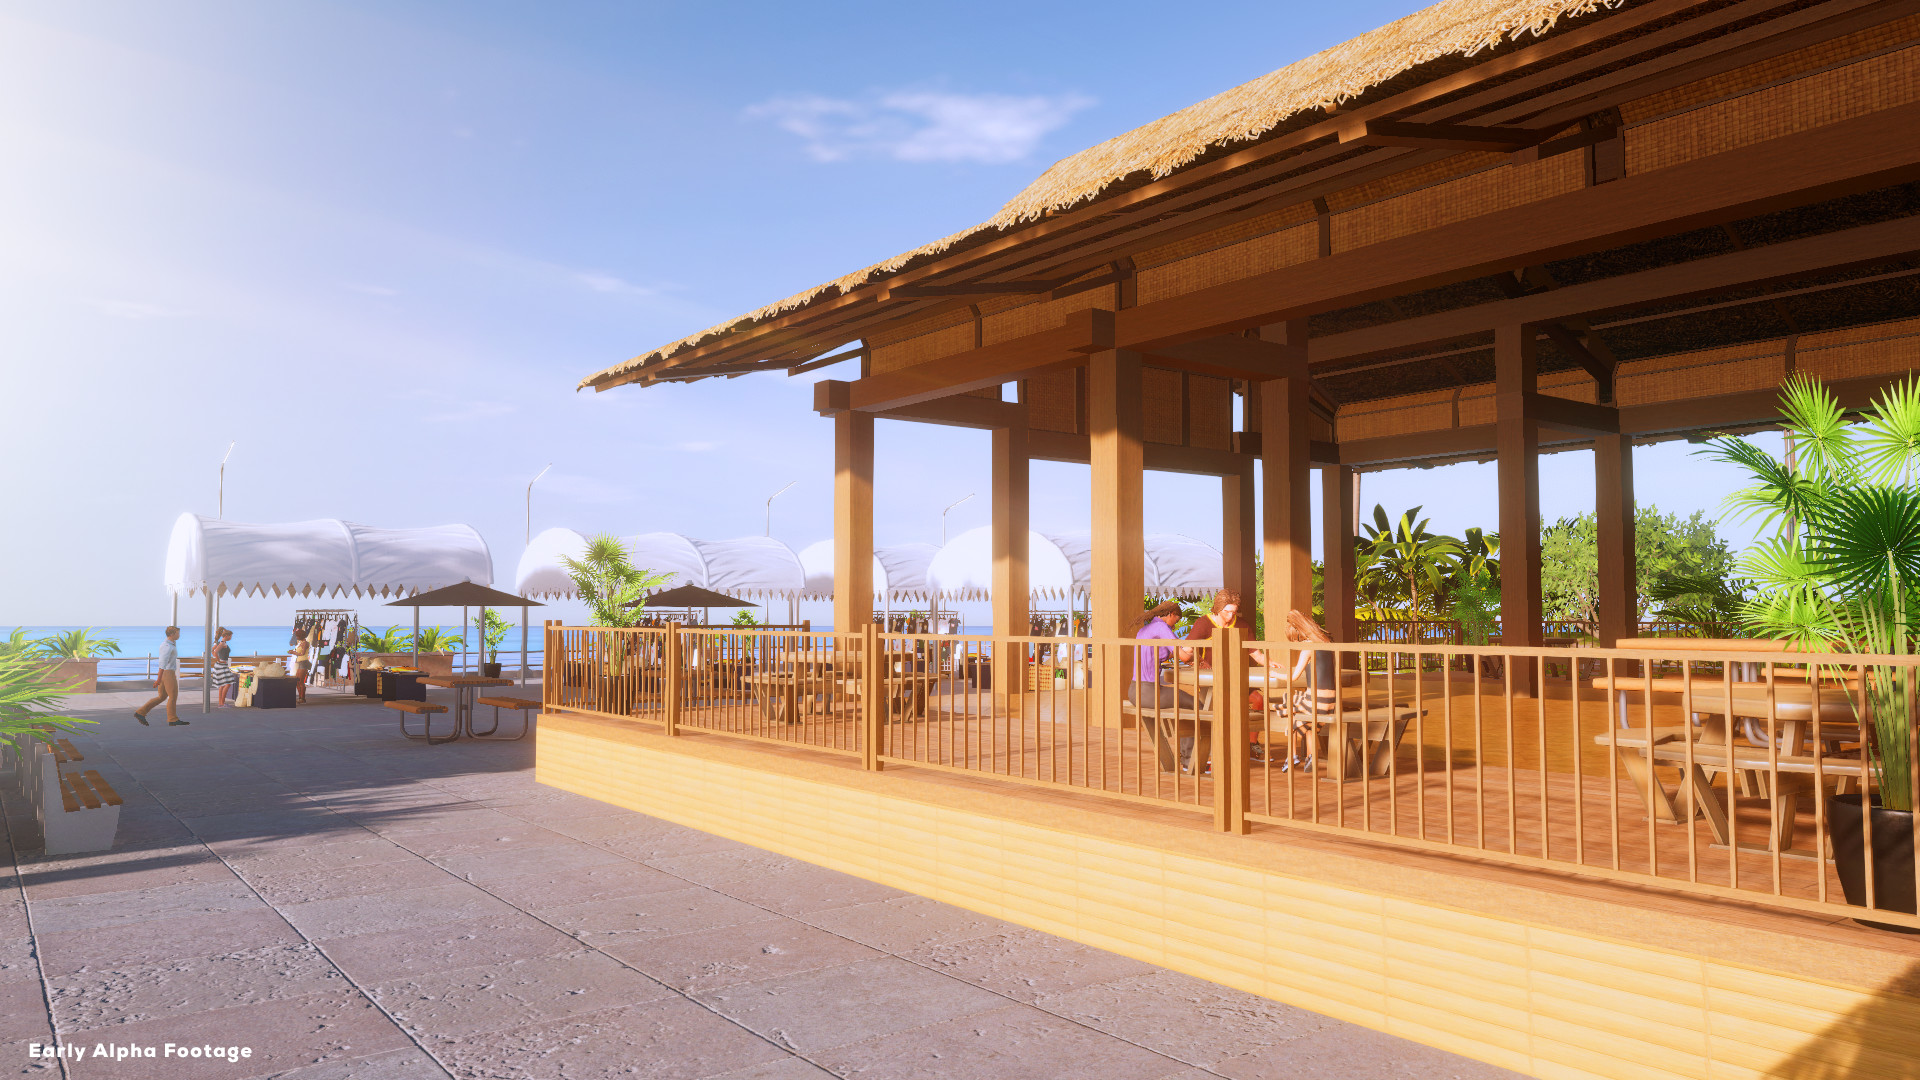 Hotel Life - A Resort Simulator screenshot 37314